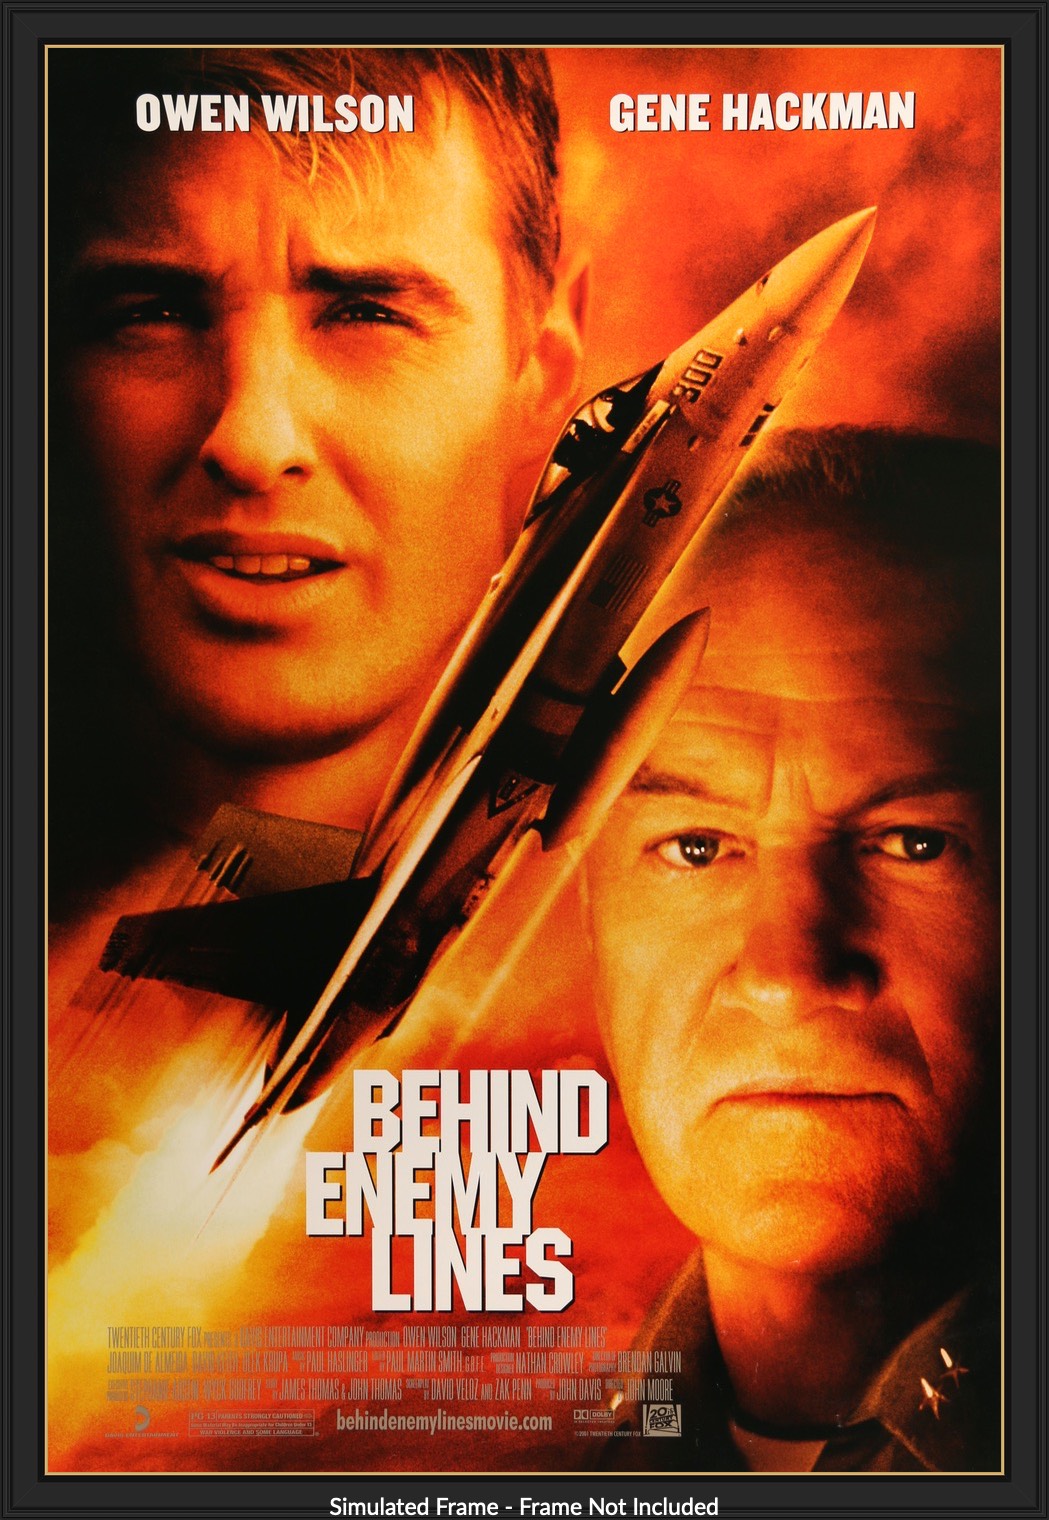 Behind Enemy Lines (2001) original movie poster for sale at Original Film Art